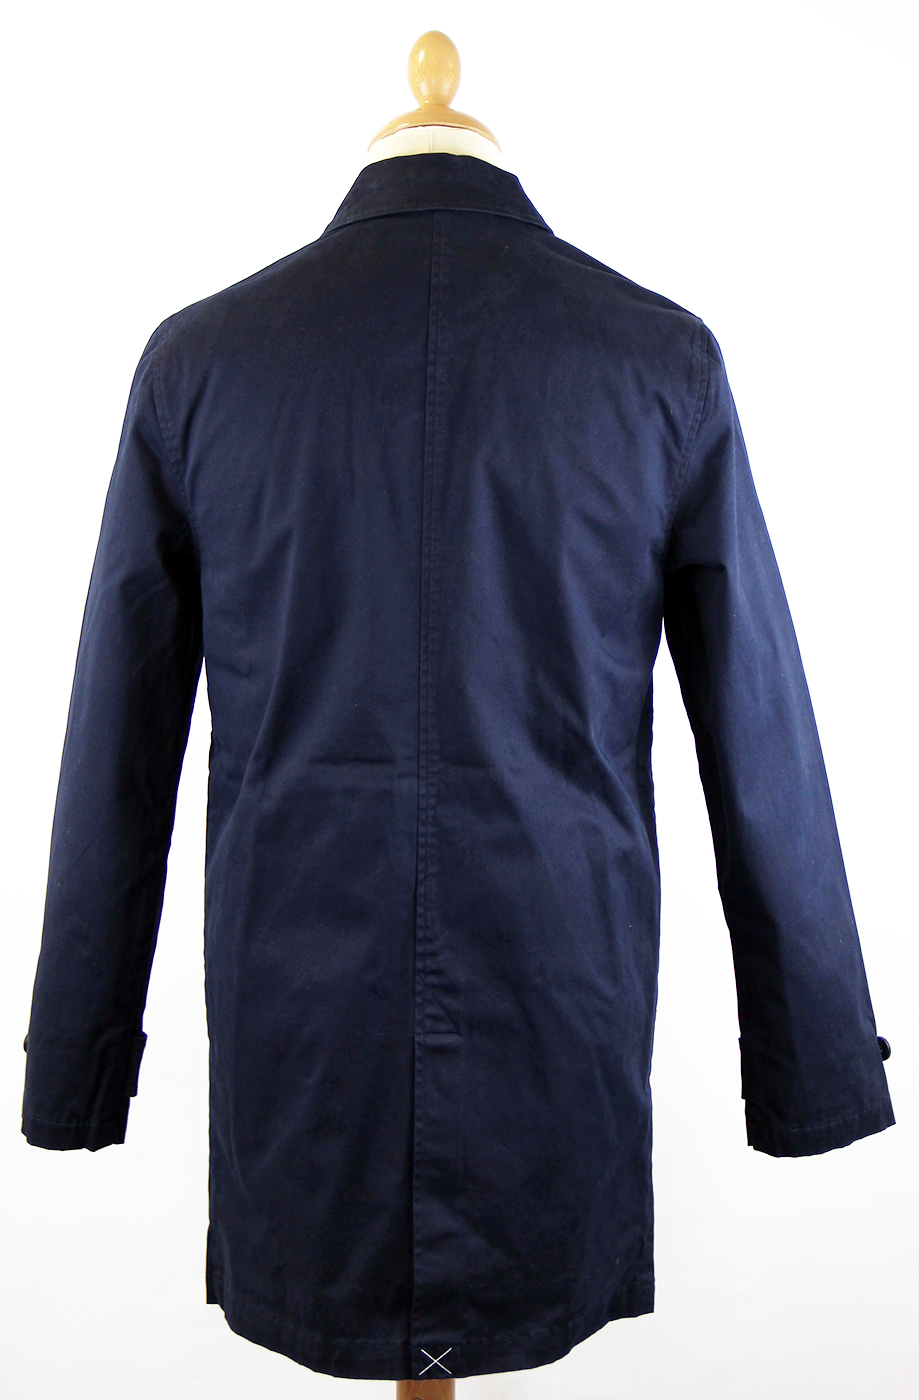 ORIGINAL PENGUIN Wender Retro 60s Mod Classic Raincoat Jacket